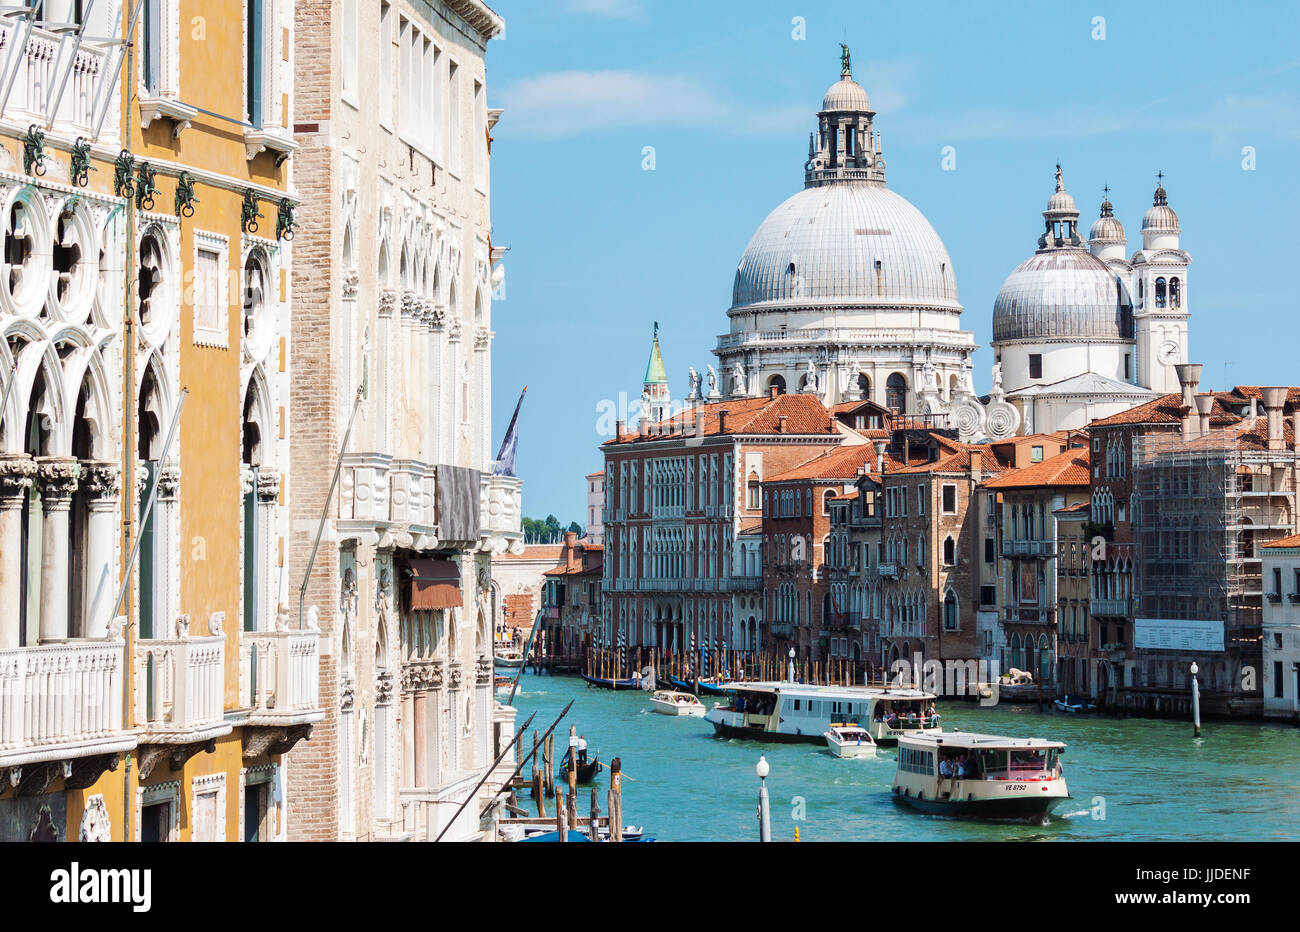 View of the Grand Canal and Basilica Santa Maria della Salute in Venice, Italy Stock Photo